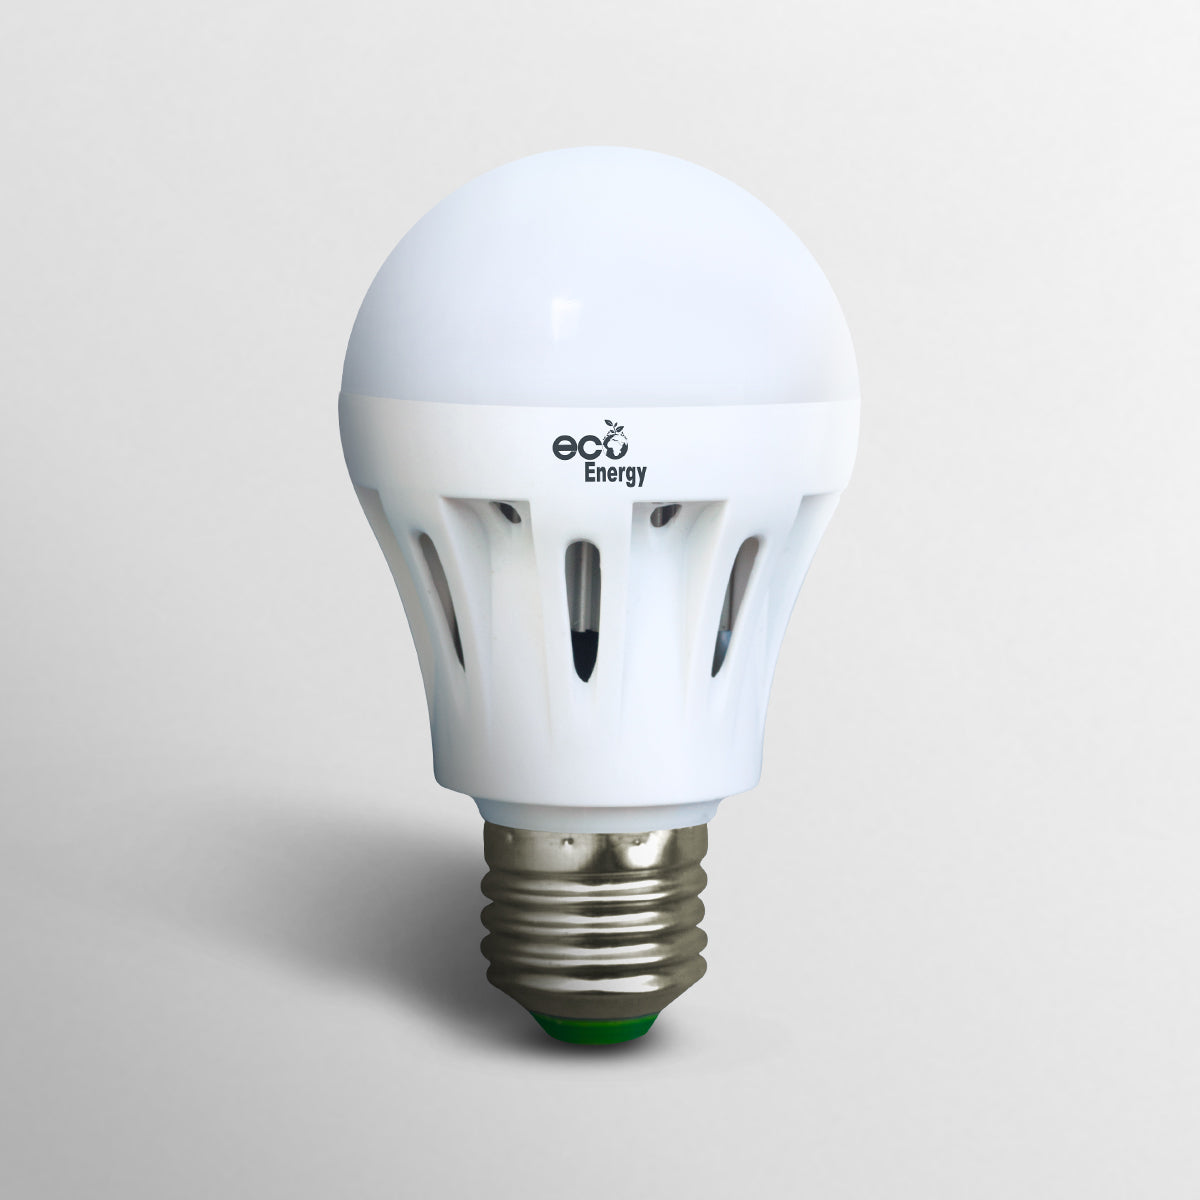 Lámpara LED de alta potencia, 90W luz blanca.